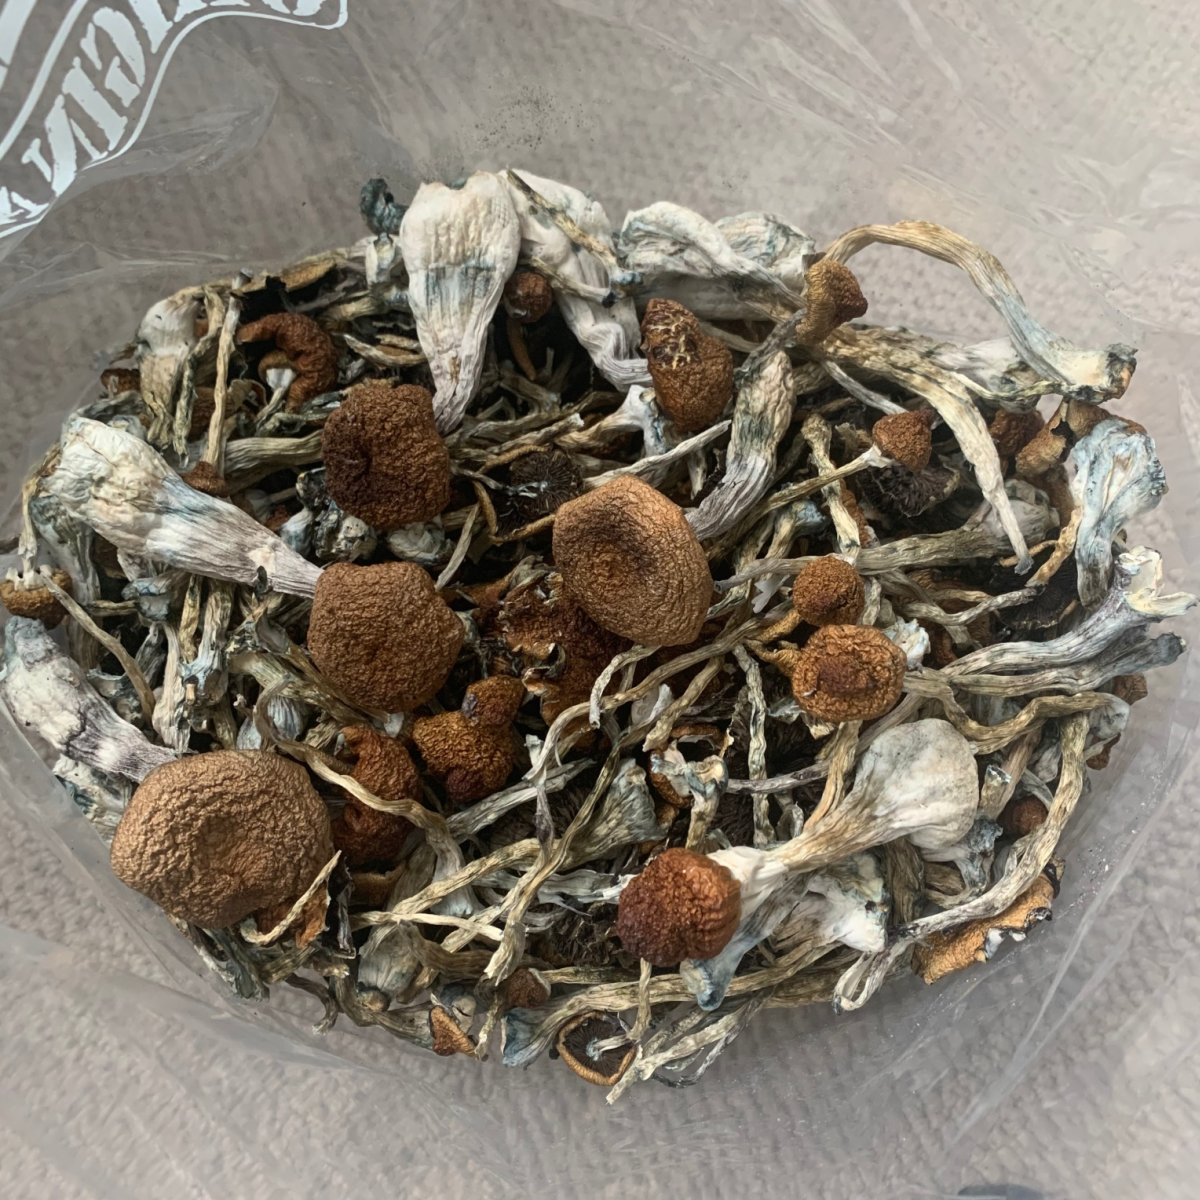 Golden Teacher mushrooms bag